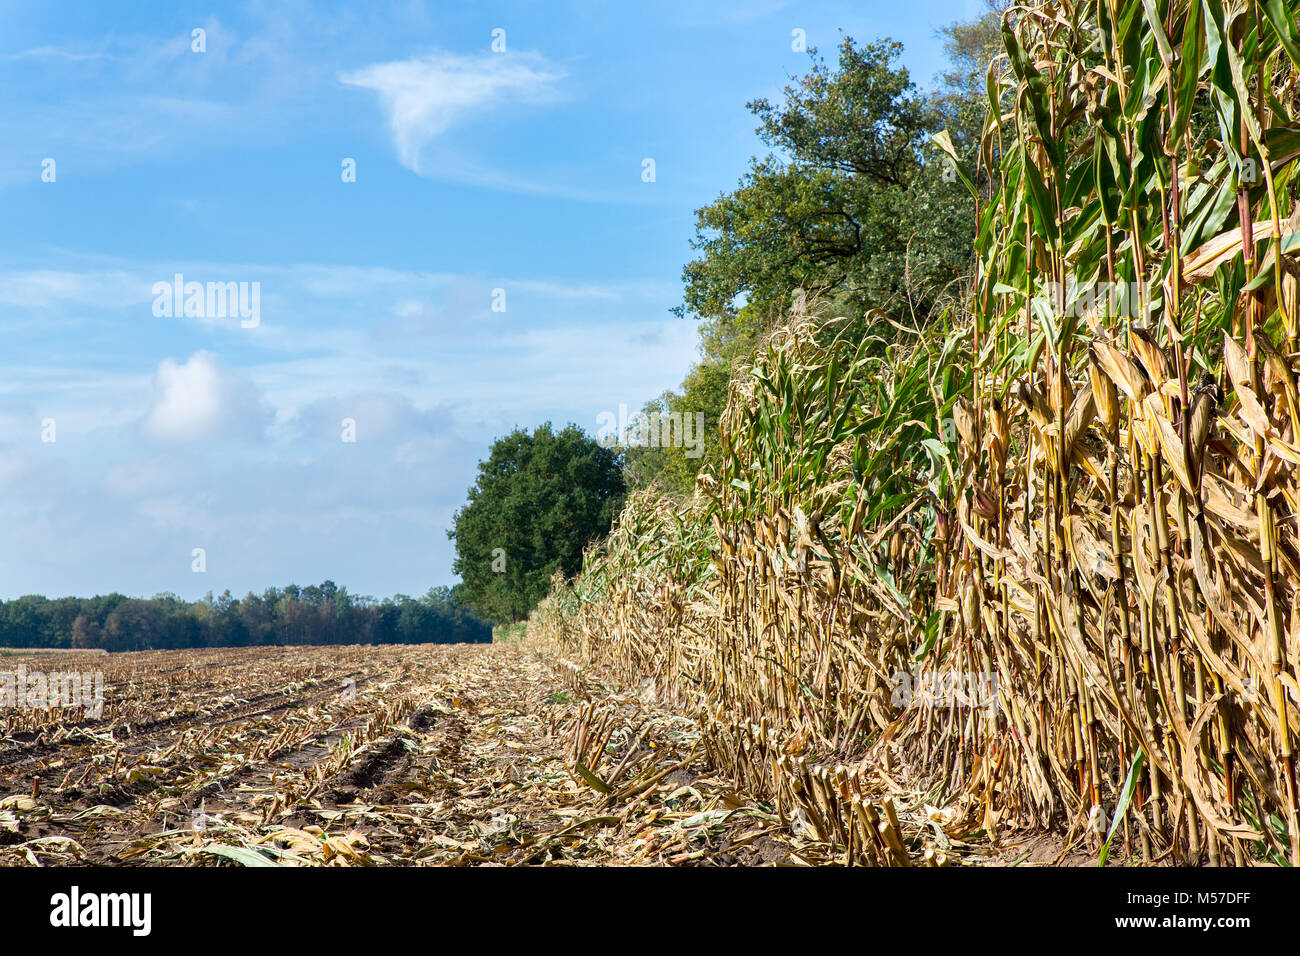 Feld mit Mais Stoppeln und Pflanzen Stockfoto